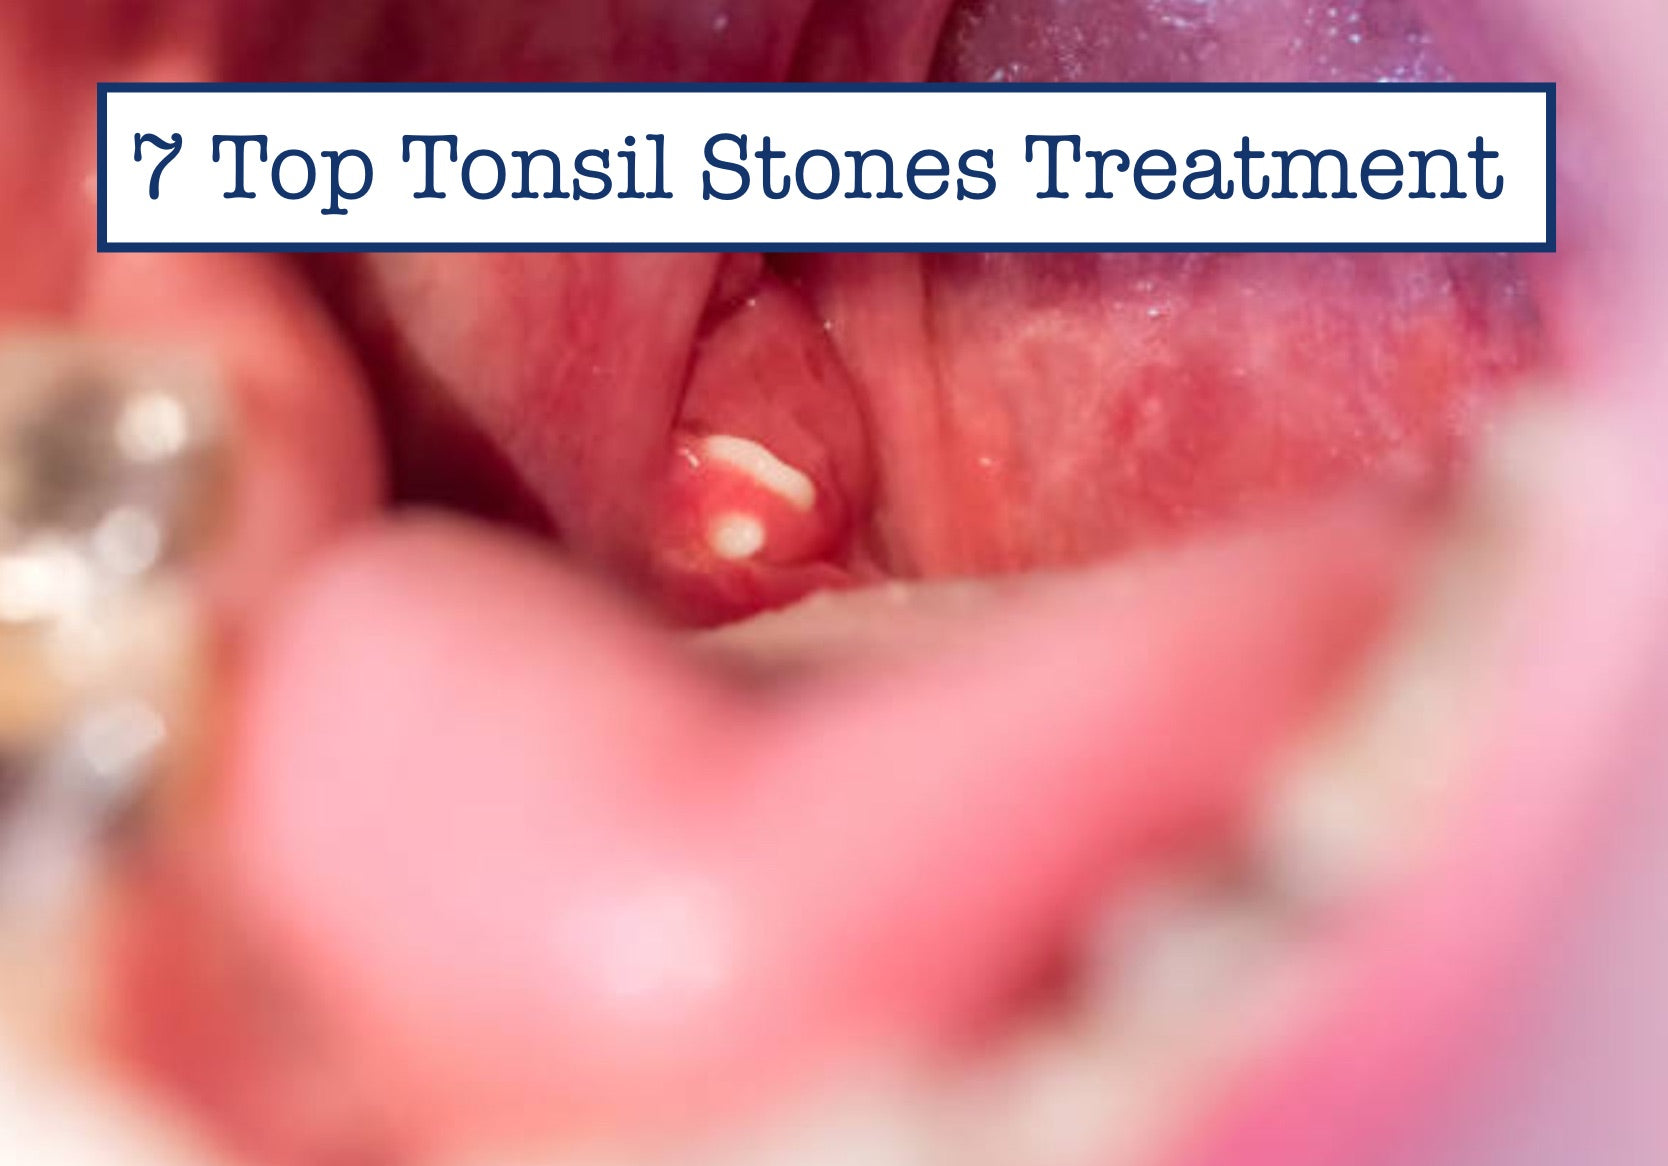 7 Top Tonsil Stones Treatment